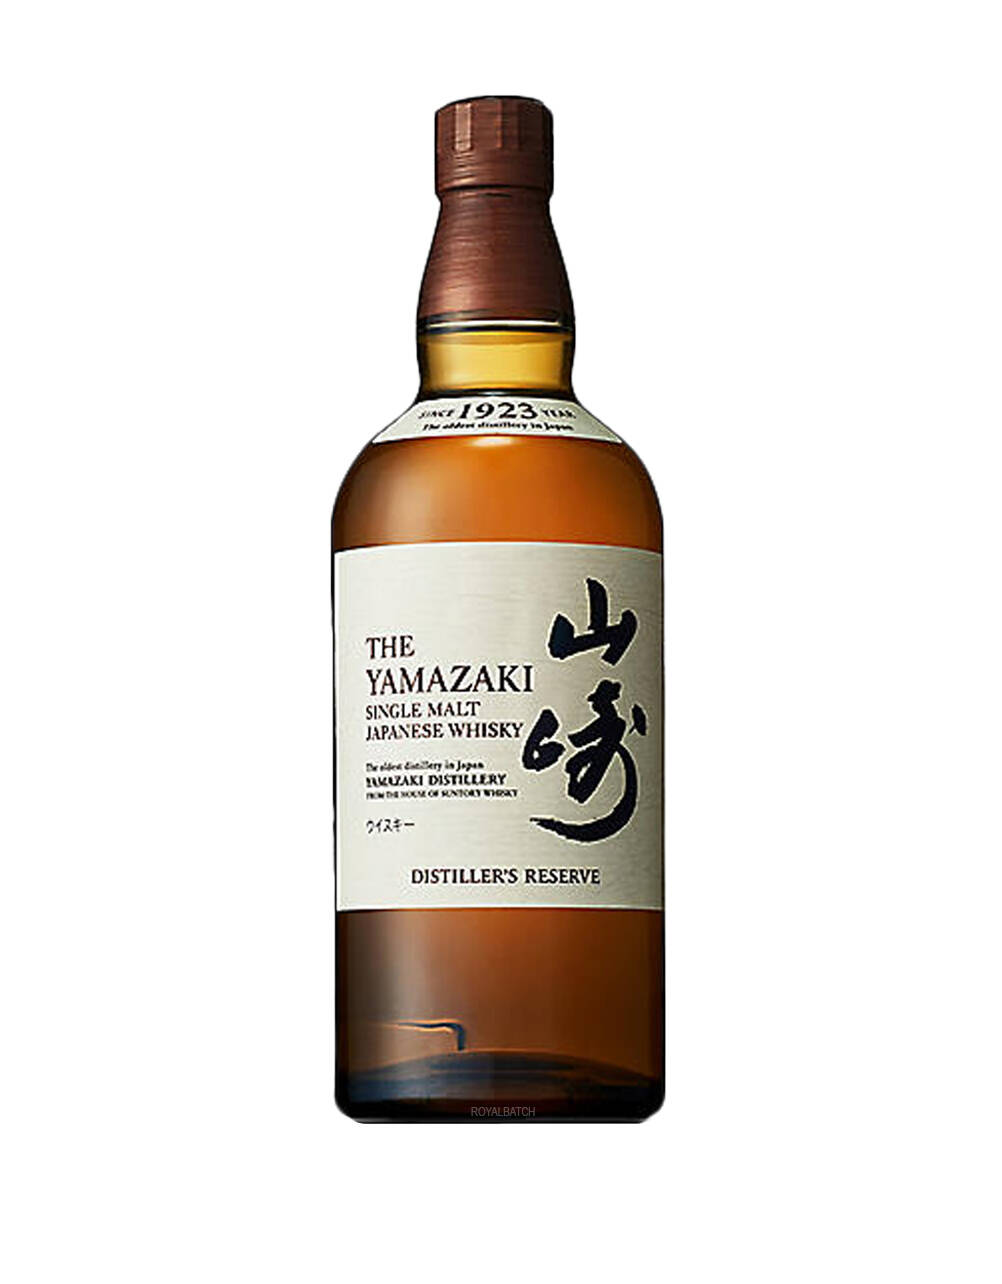 The Yamazaki Distillers Reserve Single Malt Japanese Whisky